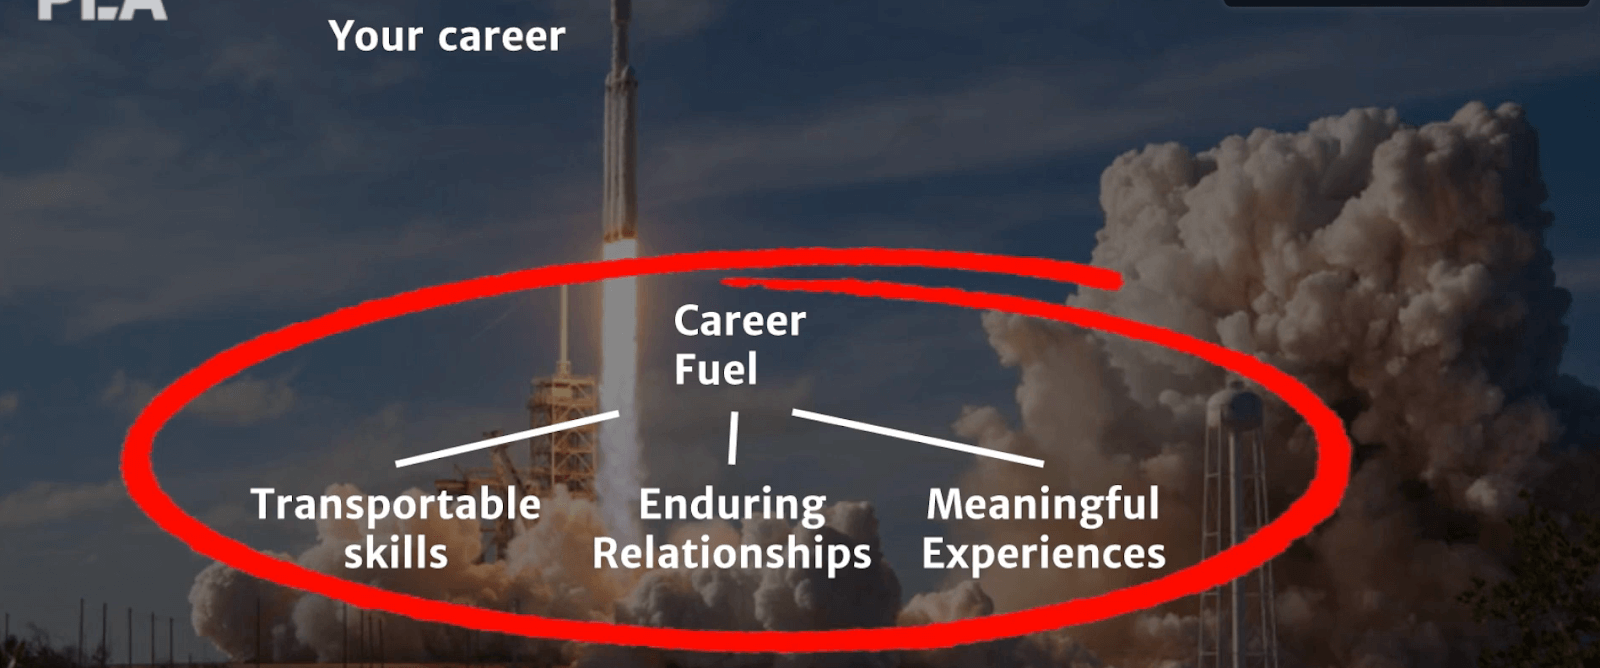 career fuel